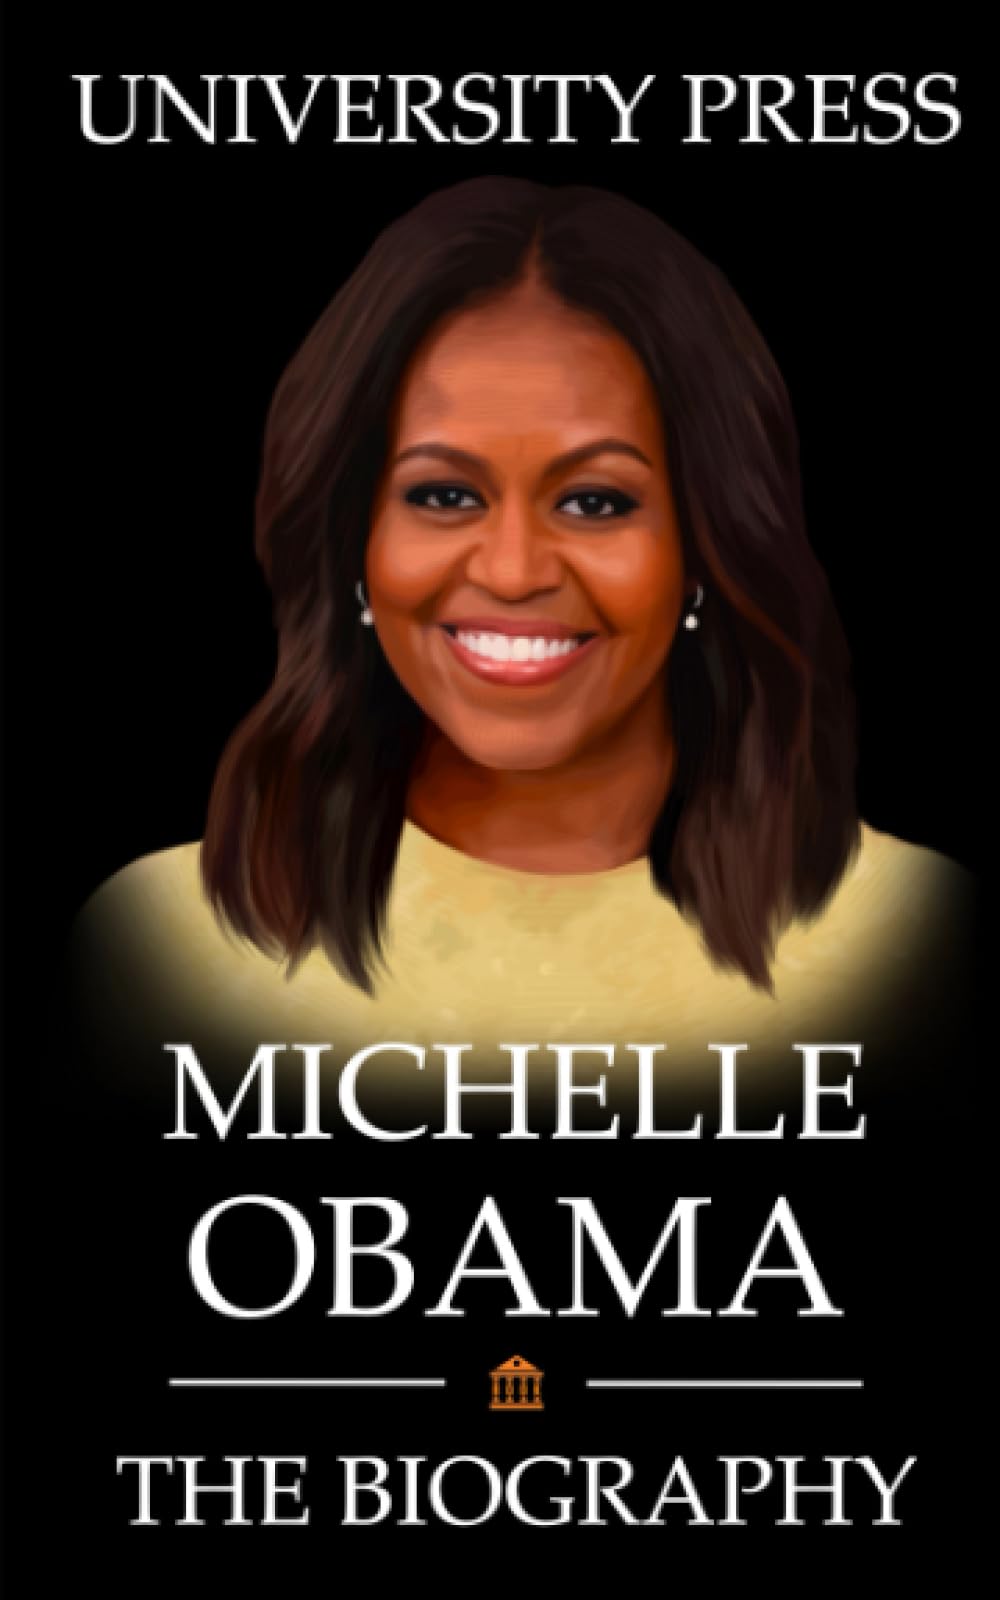 Michelle Obama Book: The Biography of Michelle Obama